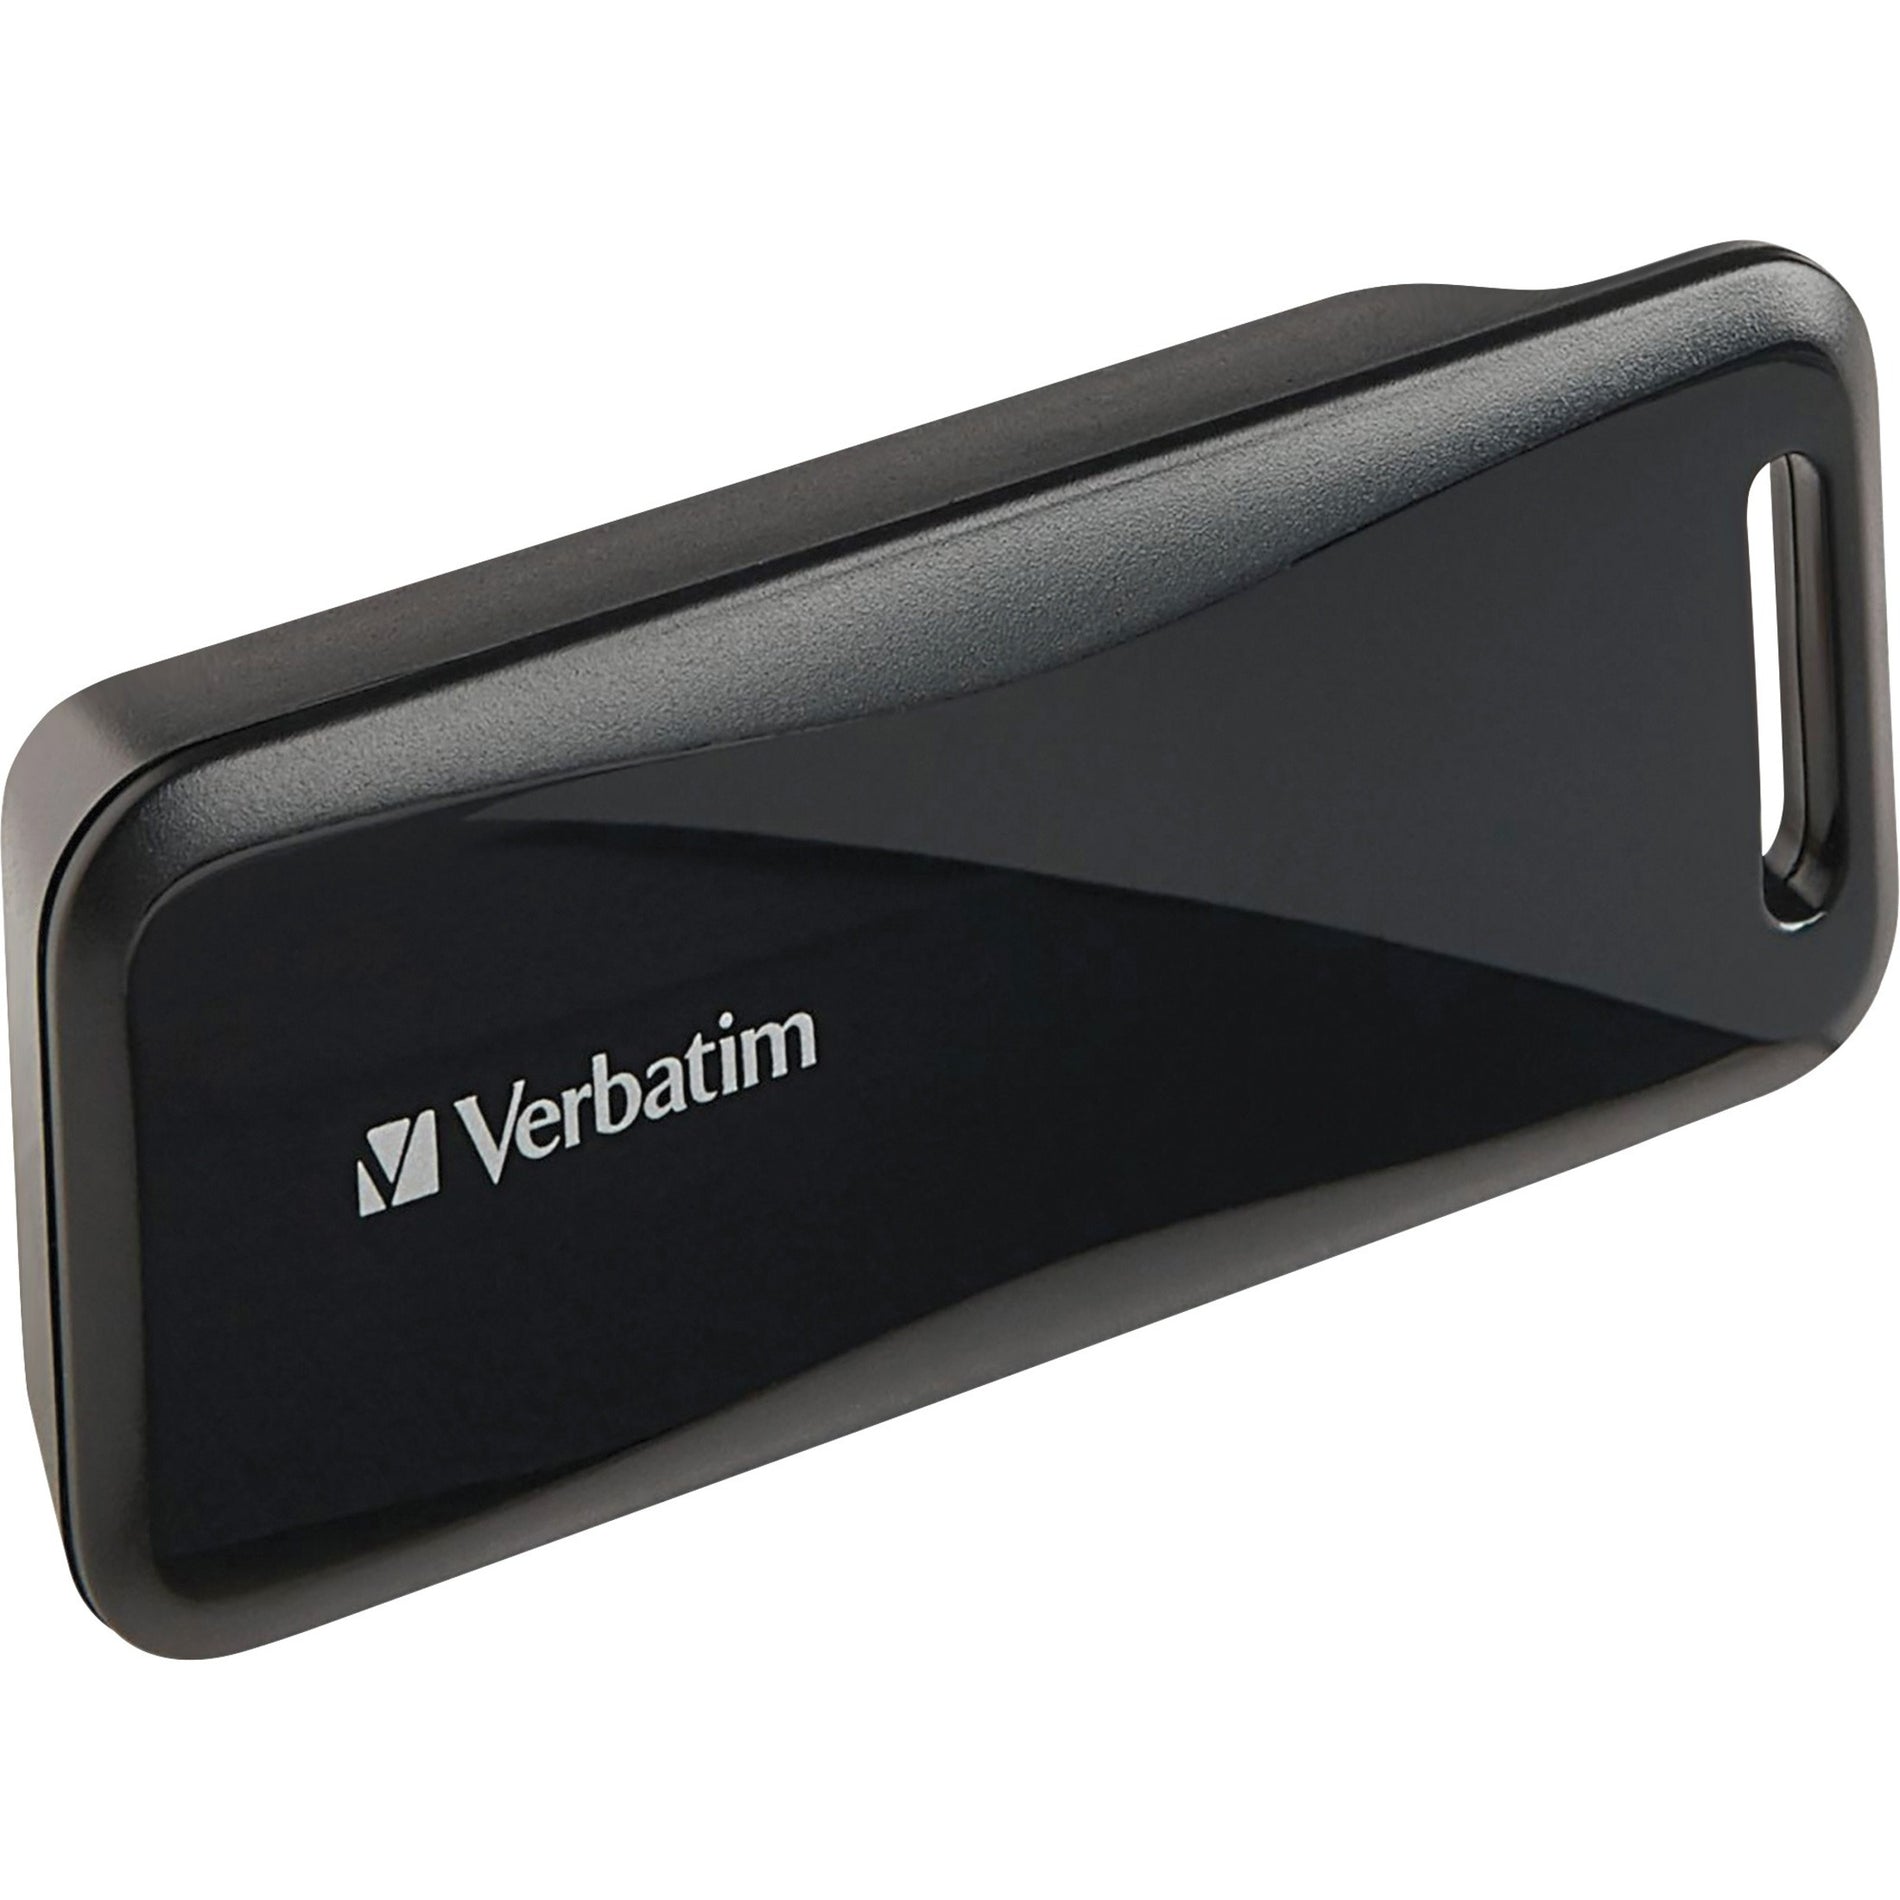 Verbatim 99236 USB-C Pocket Card Reader, One Year Limited Warranty, UL Listed Certification